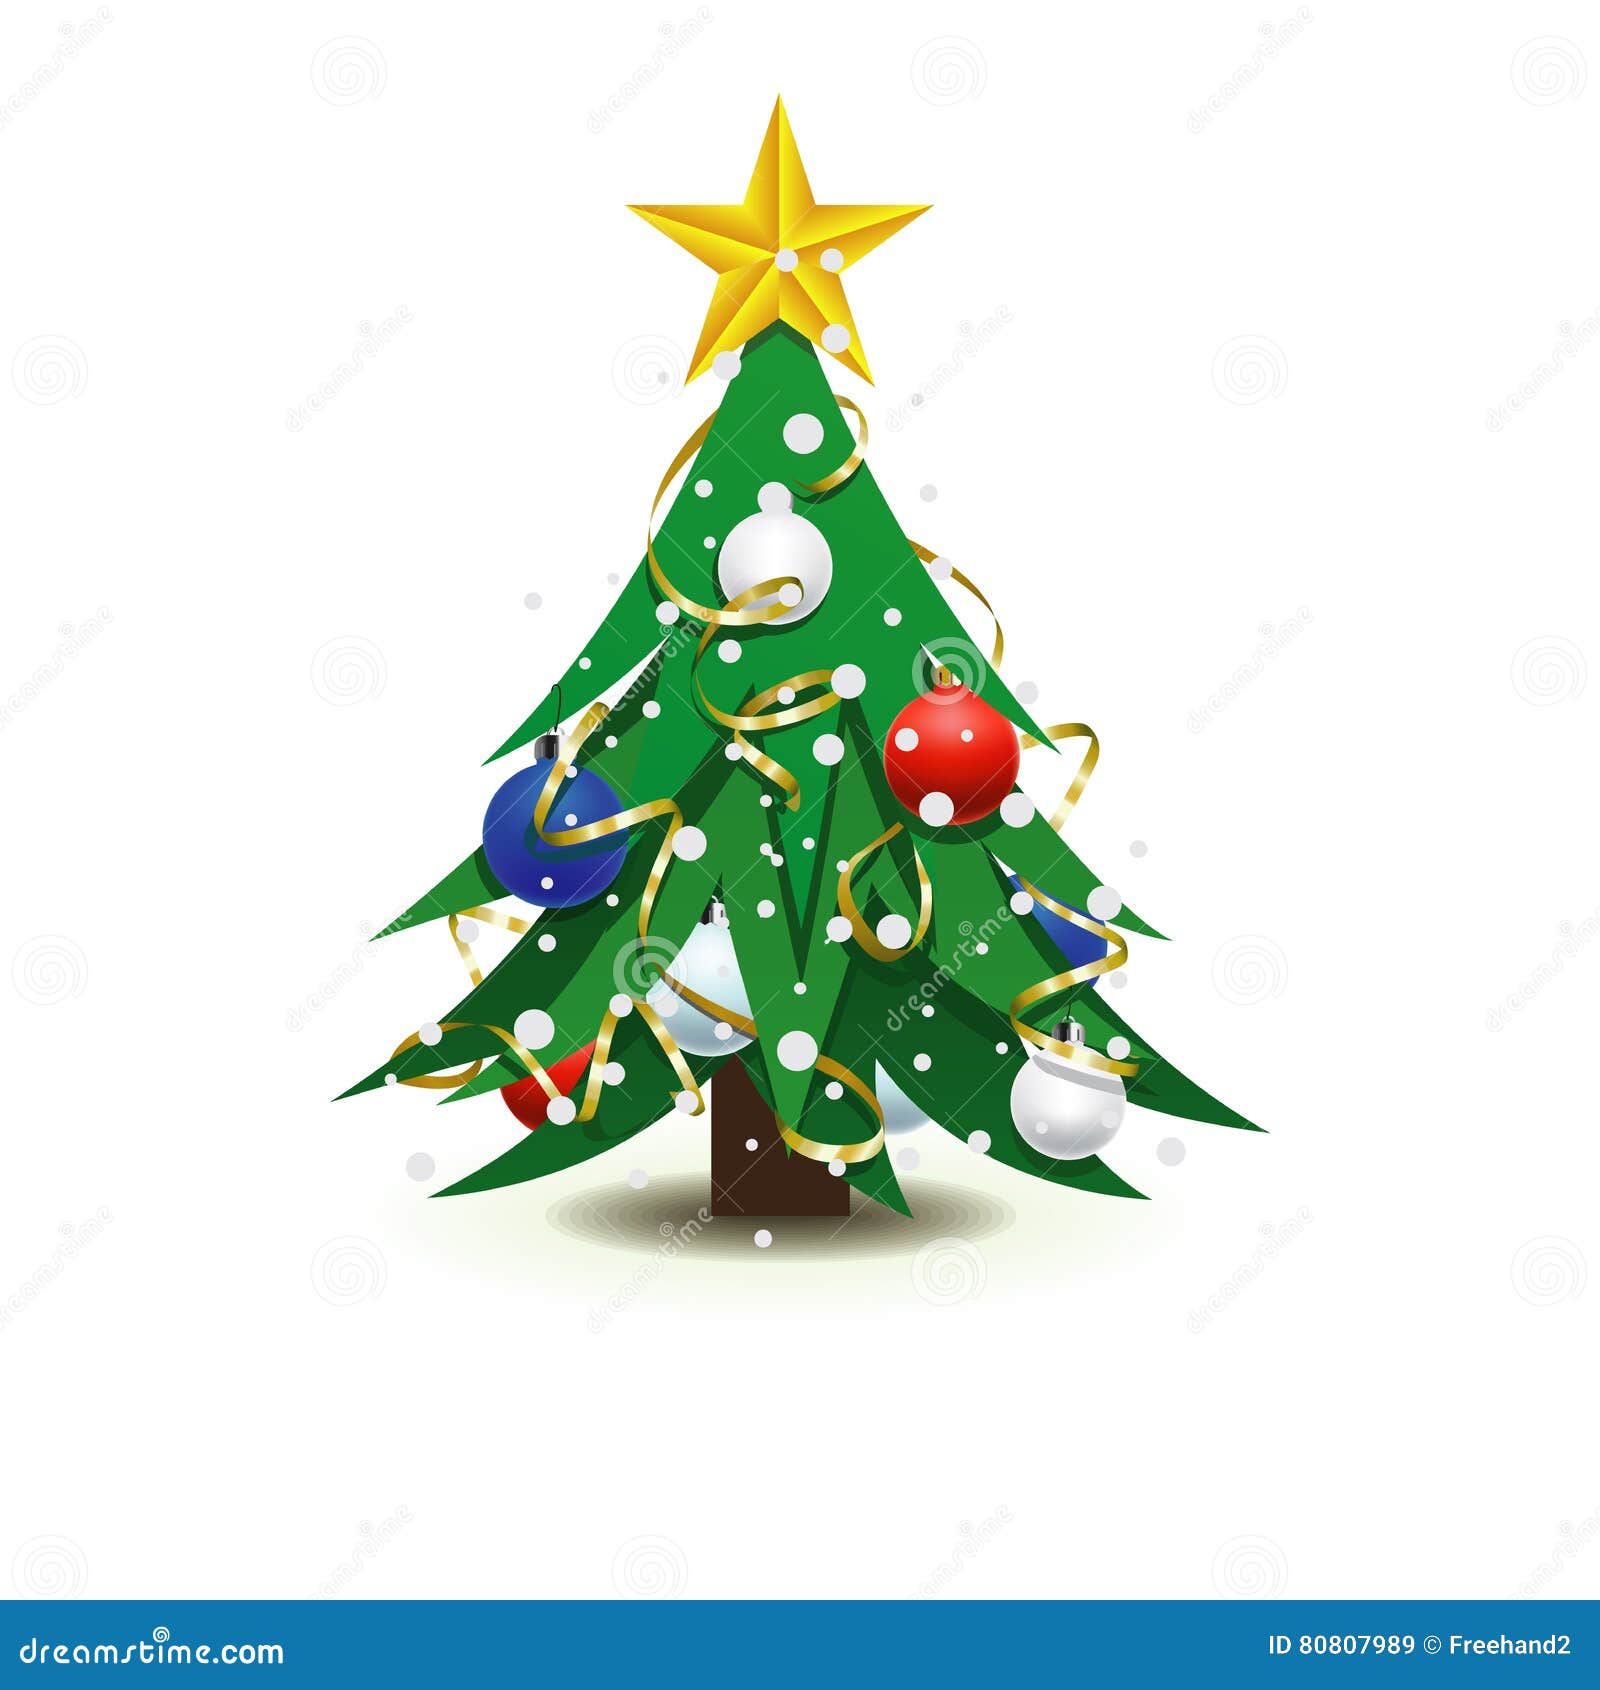 Christmas tree stock illustration. Illustration of graphic - 80807989